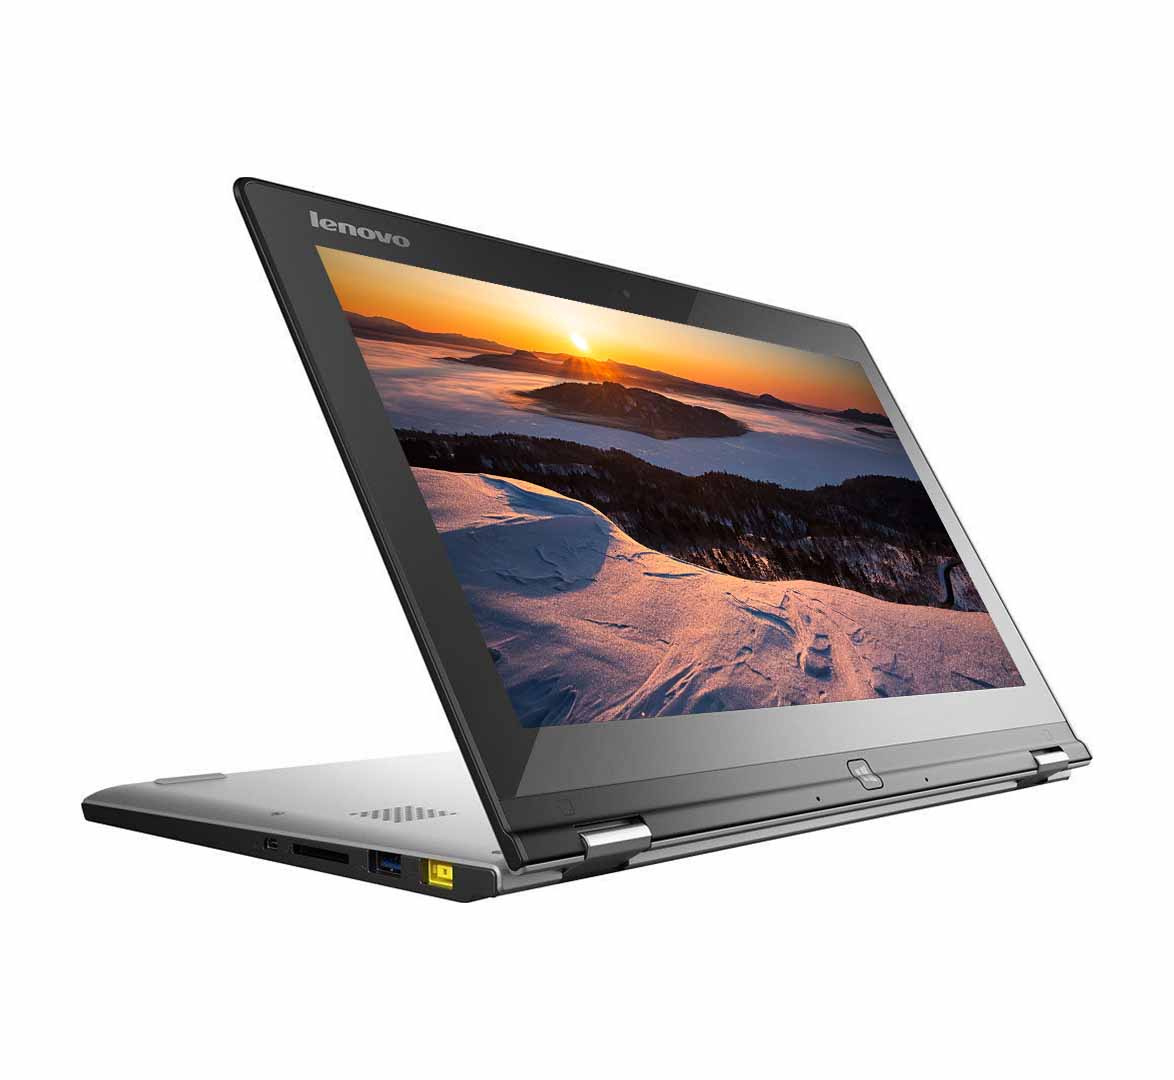 Lenovo Yoga 2-11 Business Laptop, Intel Core i3-4th Gen CPU, 4GB RAM, 128GB SSD, 11.6 inch Touchscreen 360°, Windows 10, Refurbished Laptop